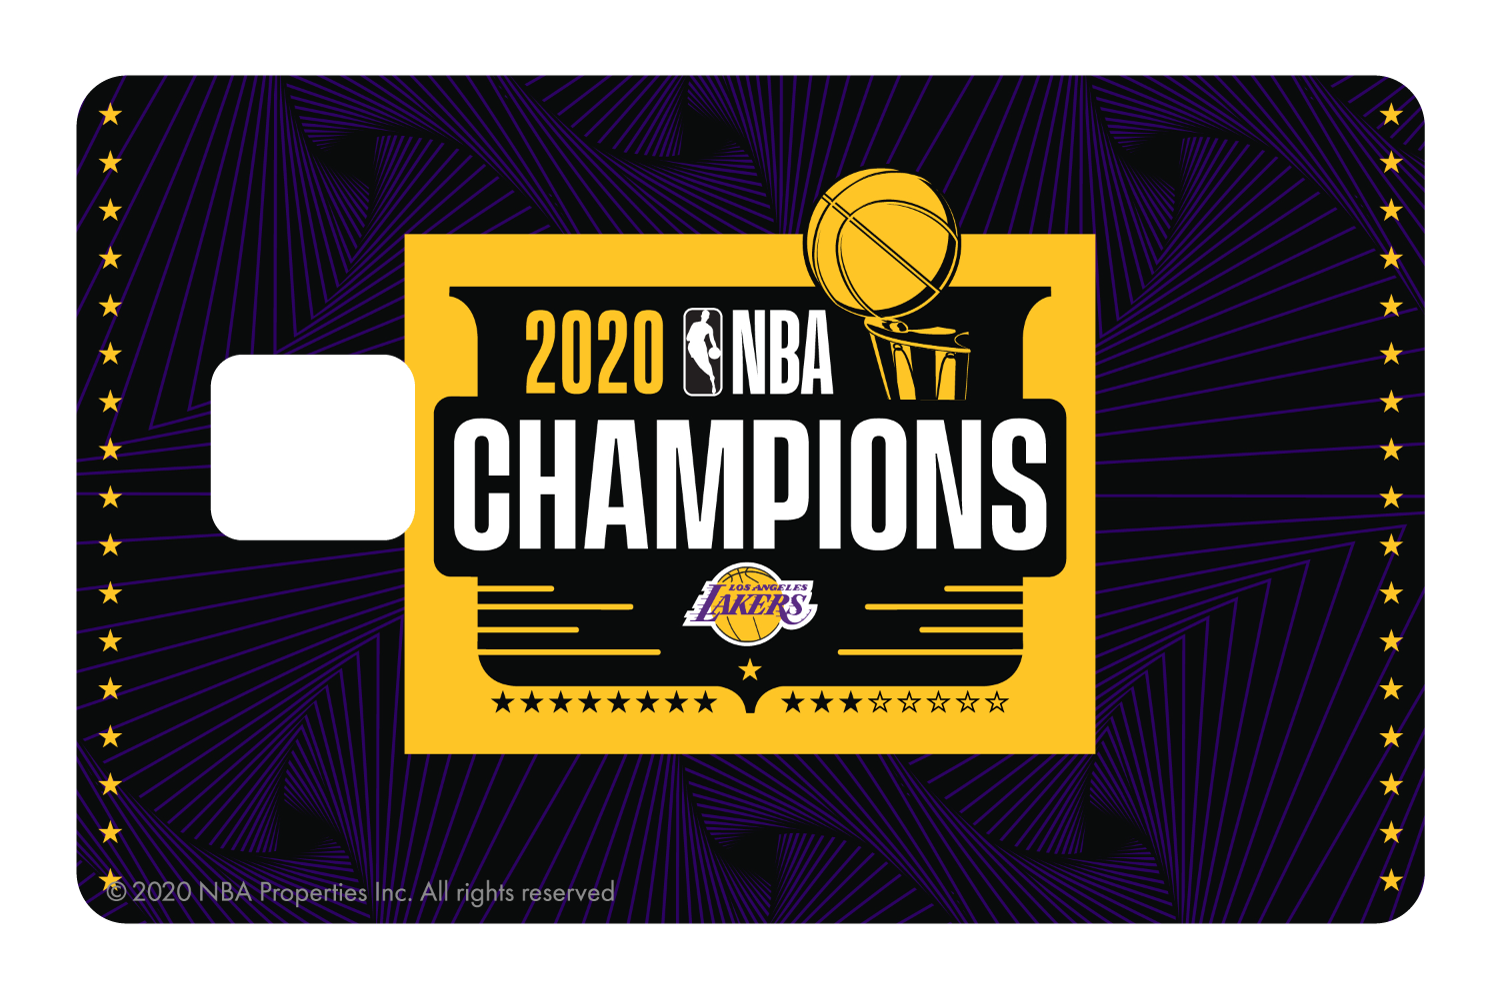 2020 NBA Champions: Los Angeles Lakers (B)